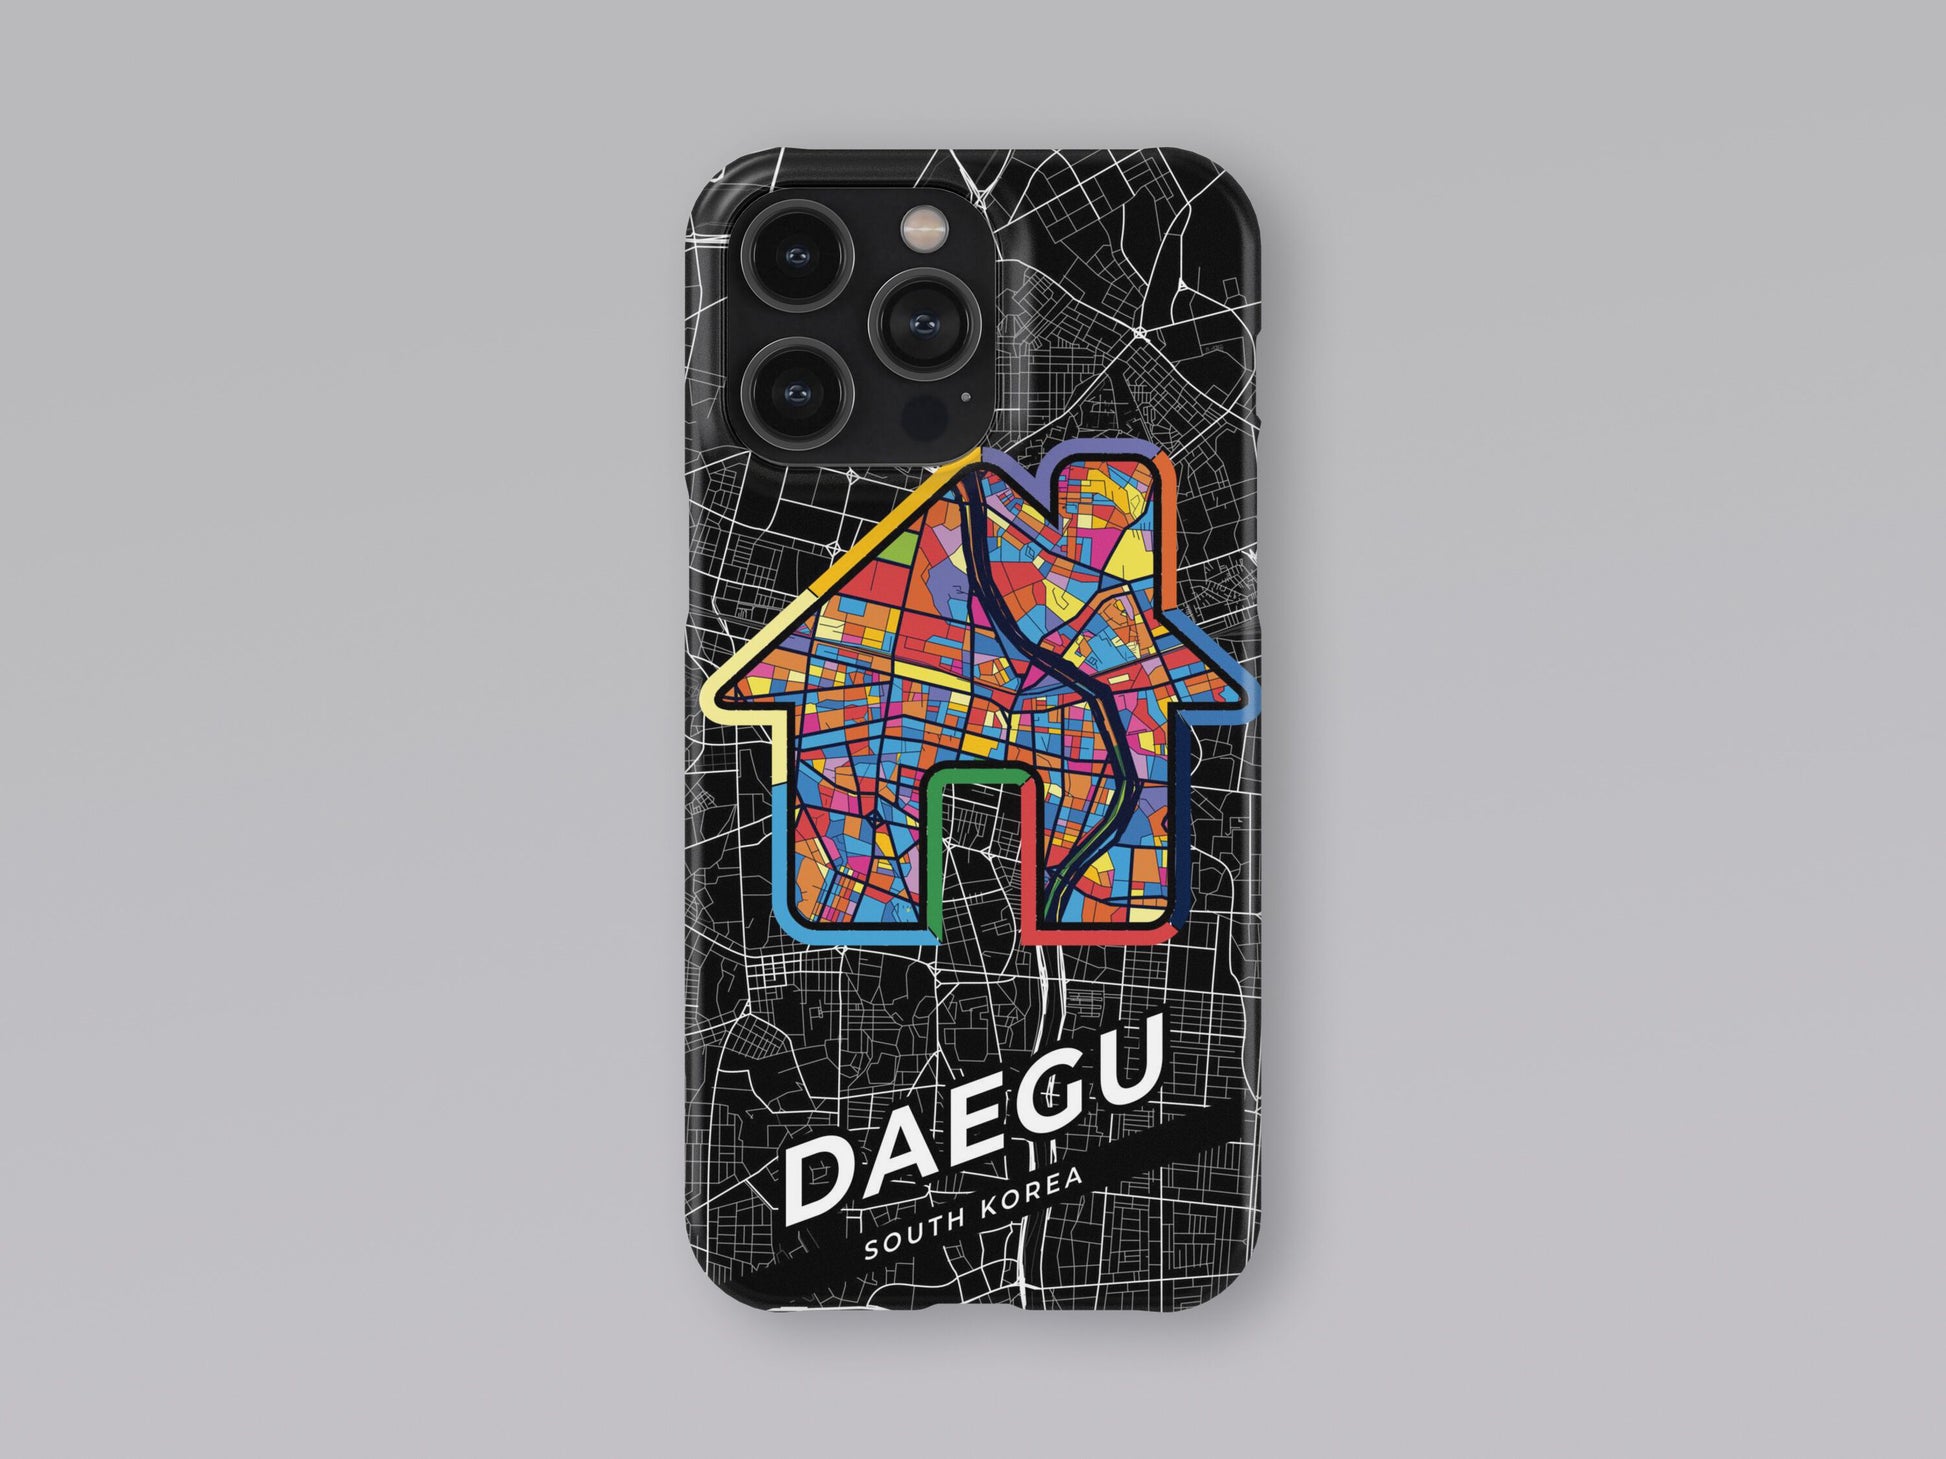 Daegu South Korea slim phone case with colorful icon. Birthday, wedding or housewarming gift. Couple match cases. 3